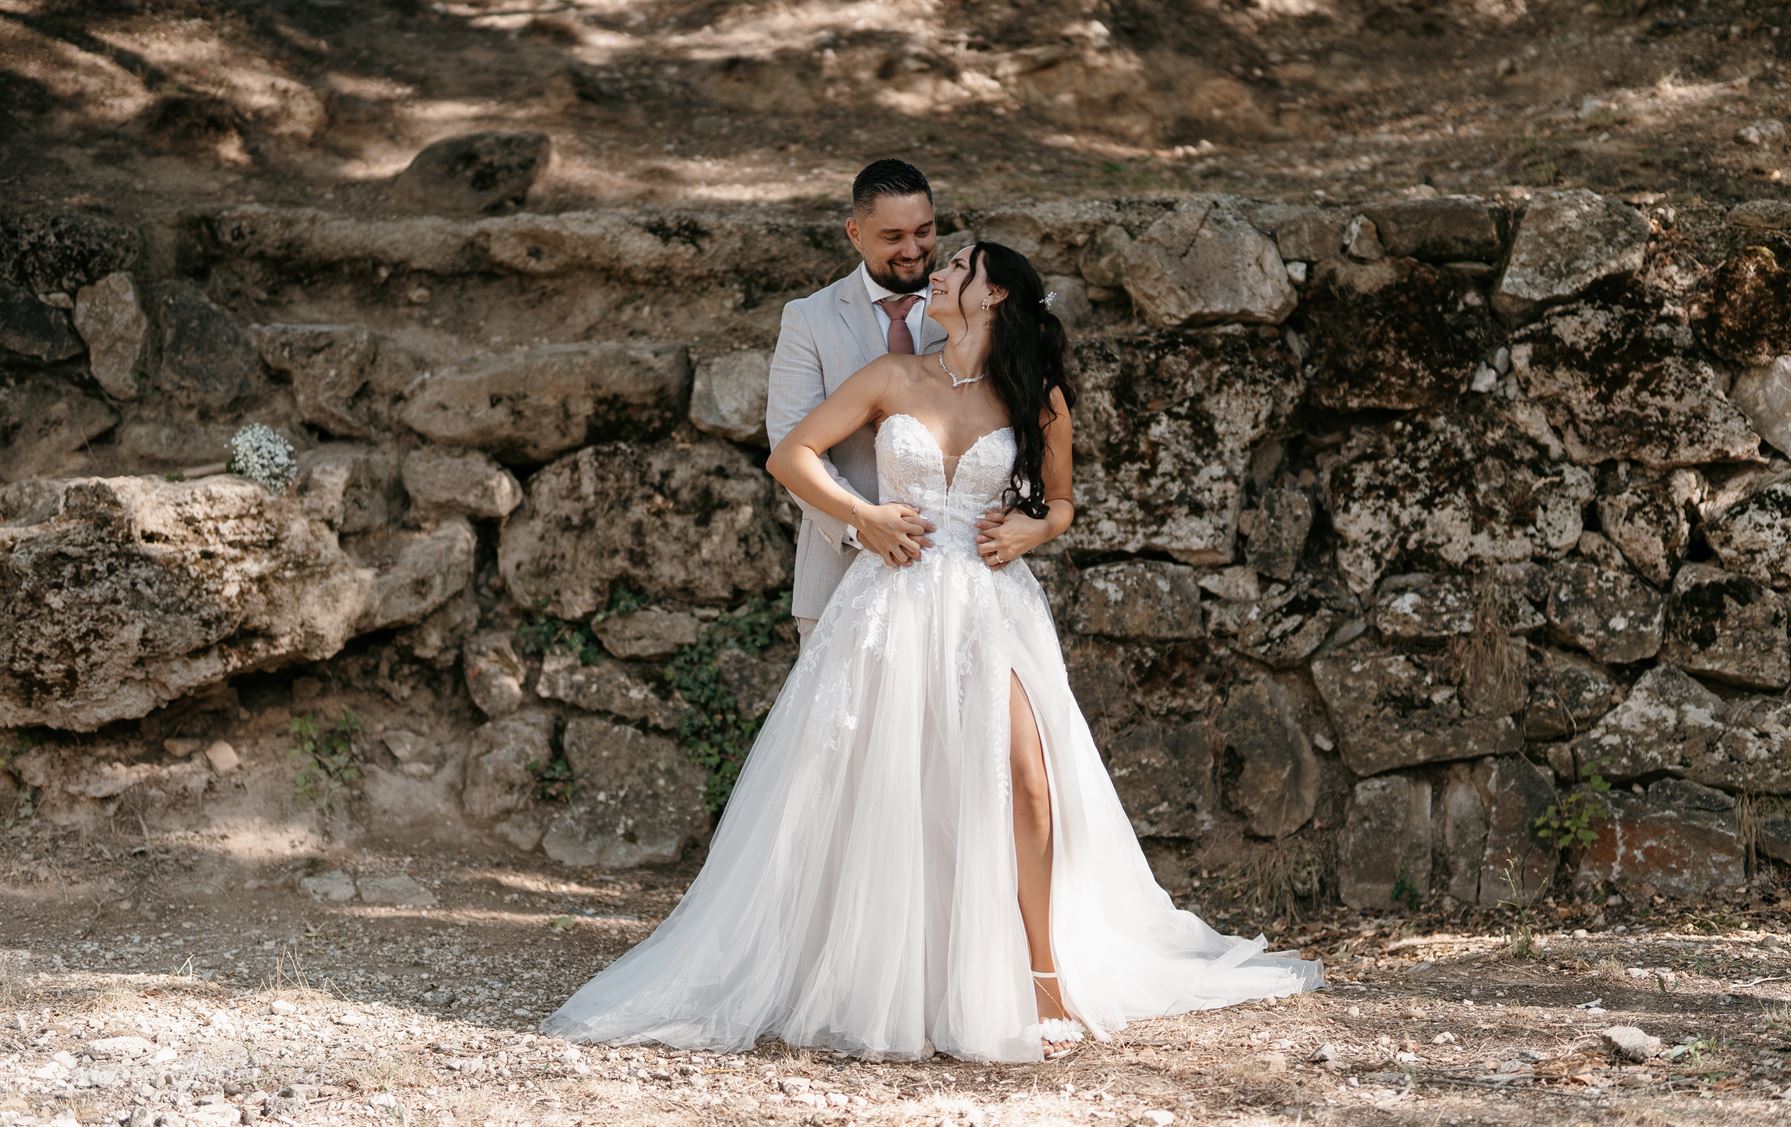 Wedding Photographer Aix en Provence: Capturing Love's Embrace 24